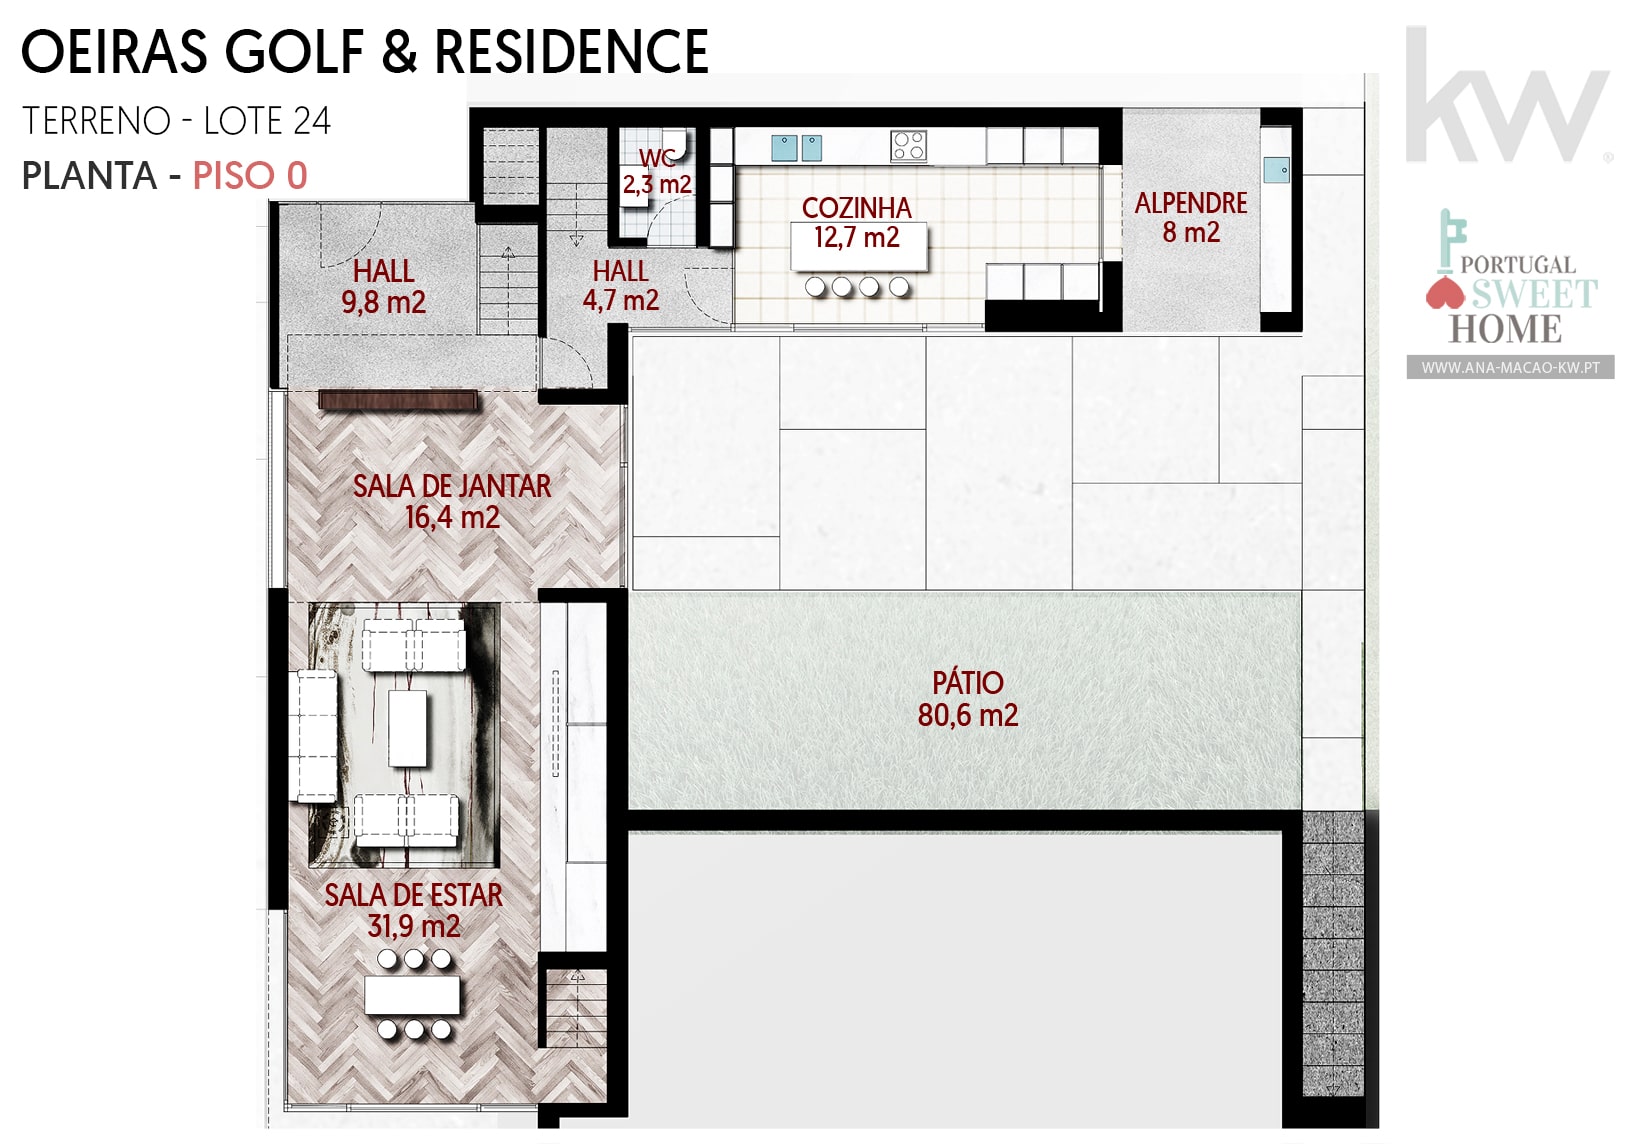 Lower floor plan (Project)